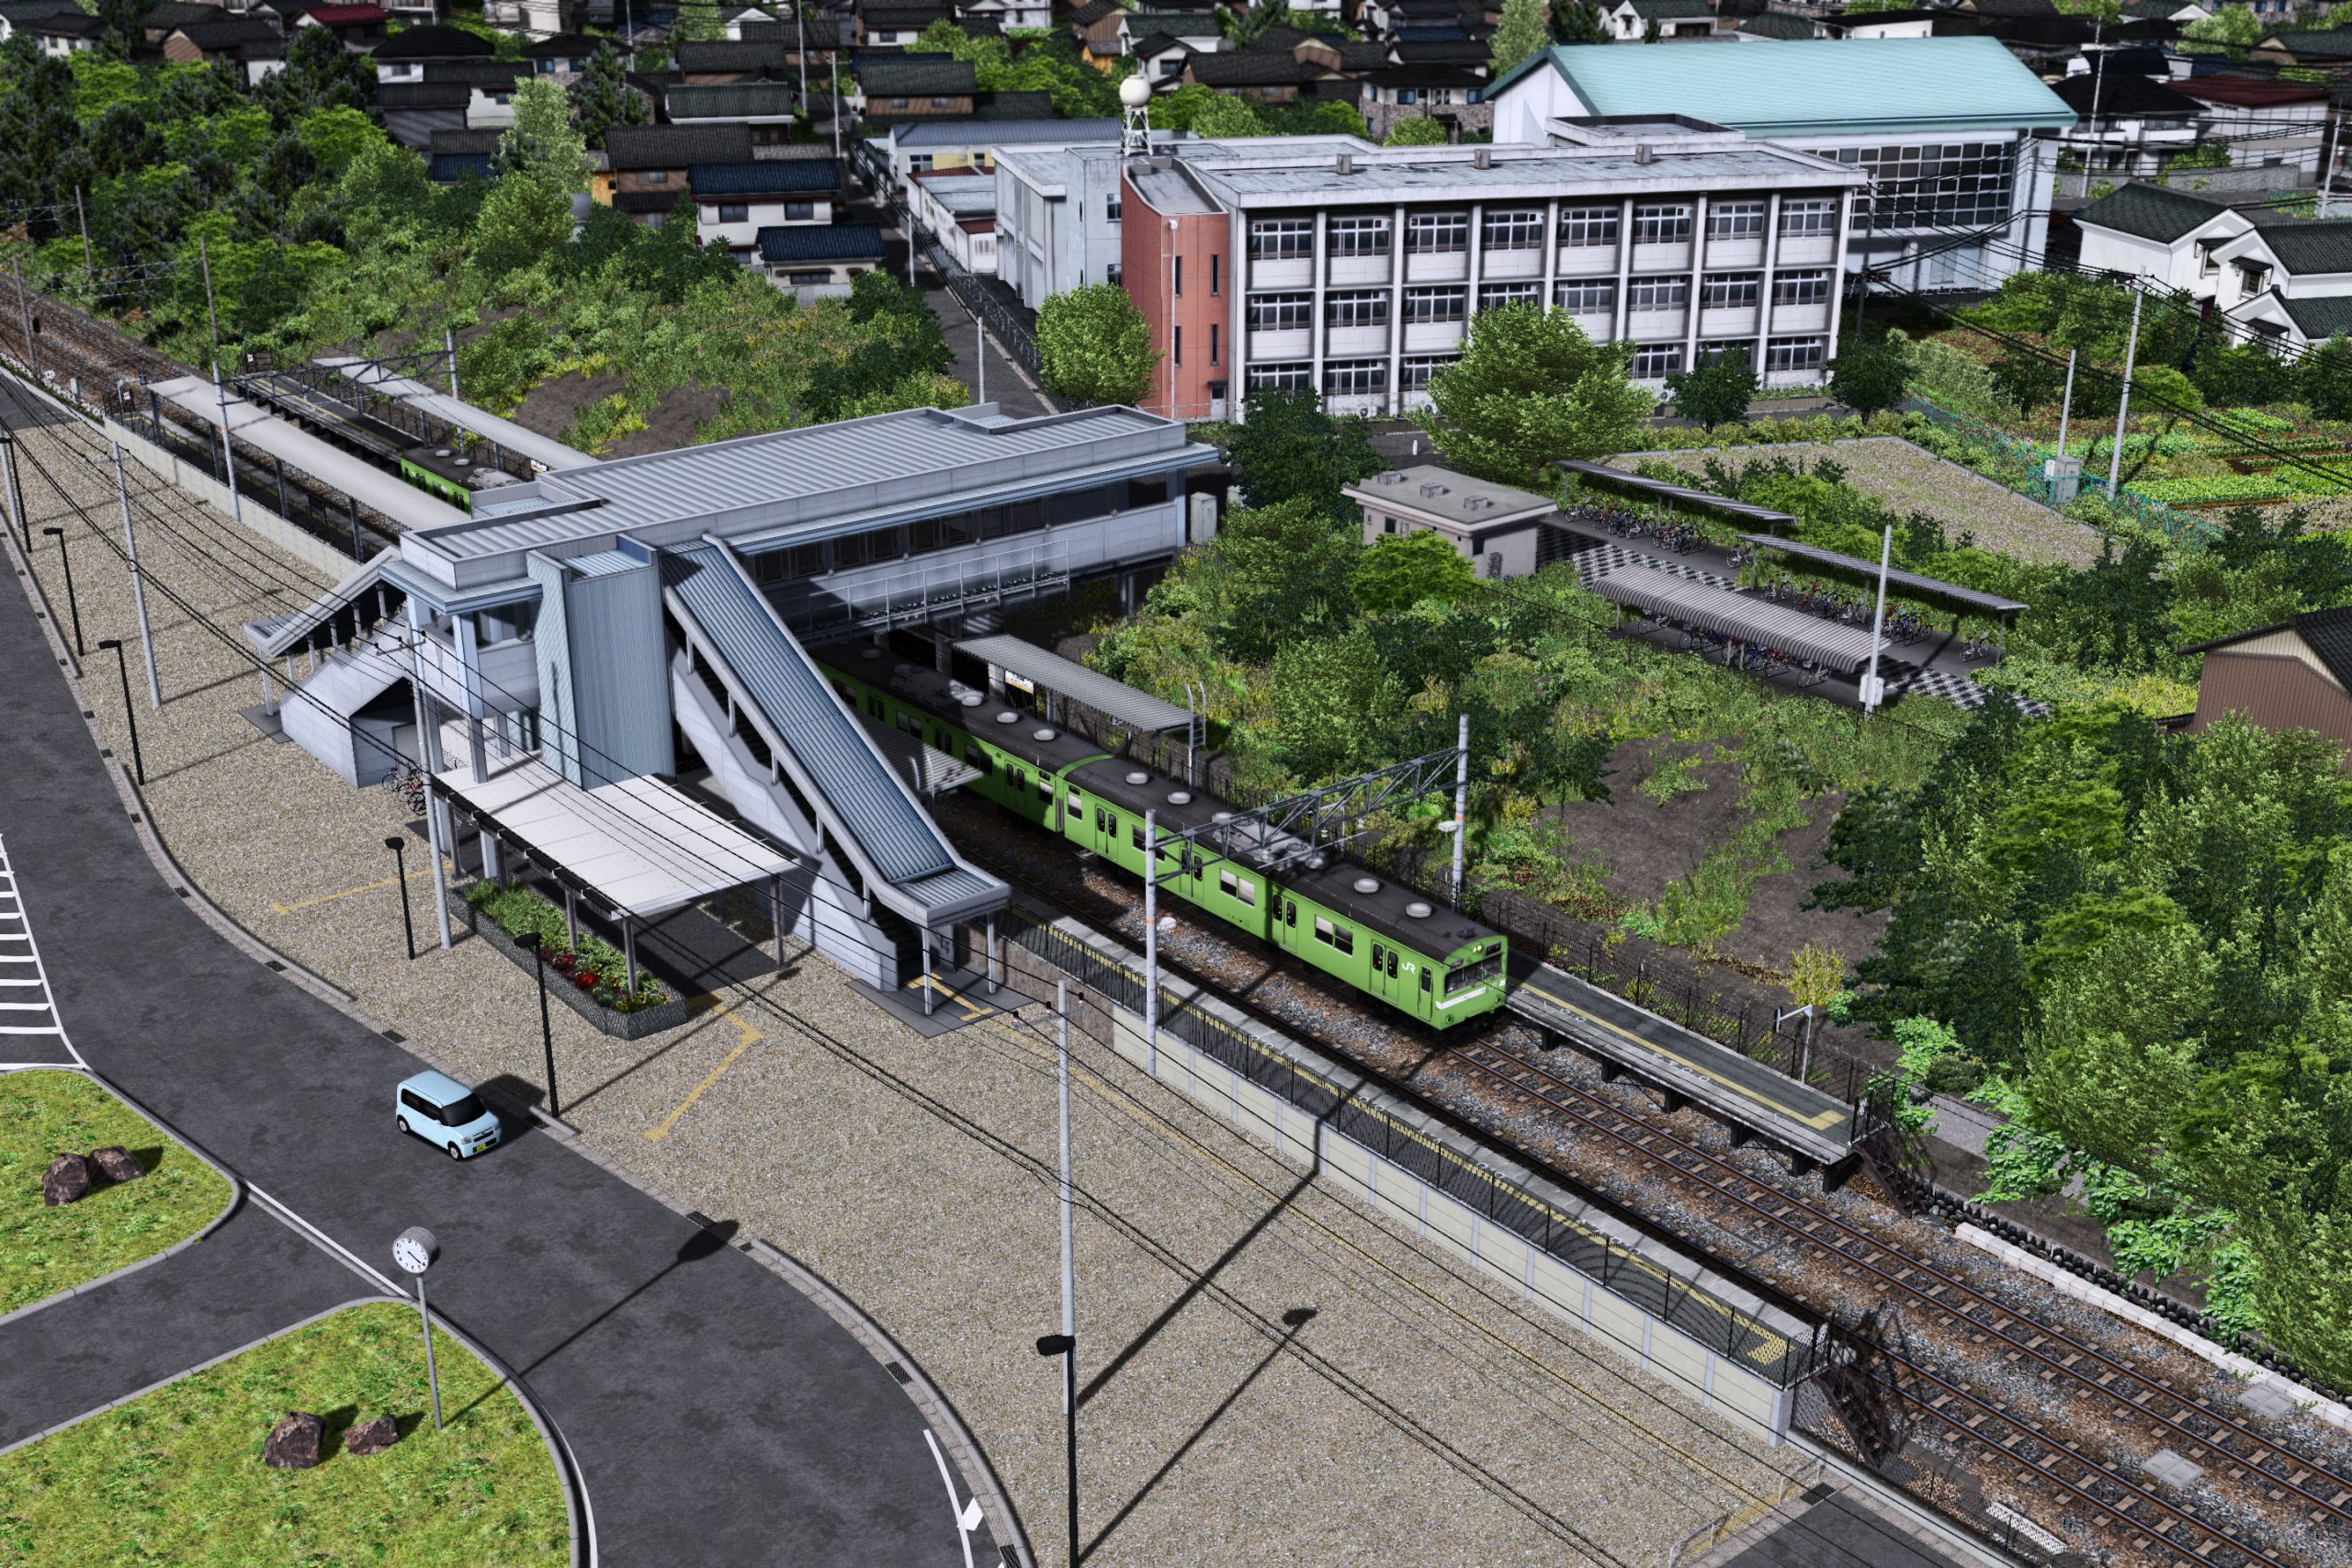 RailSimプラグイン 対向式ホームと橋上駅舎